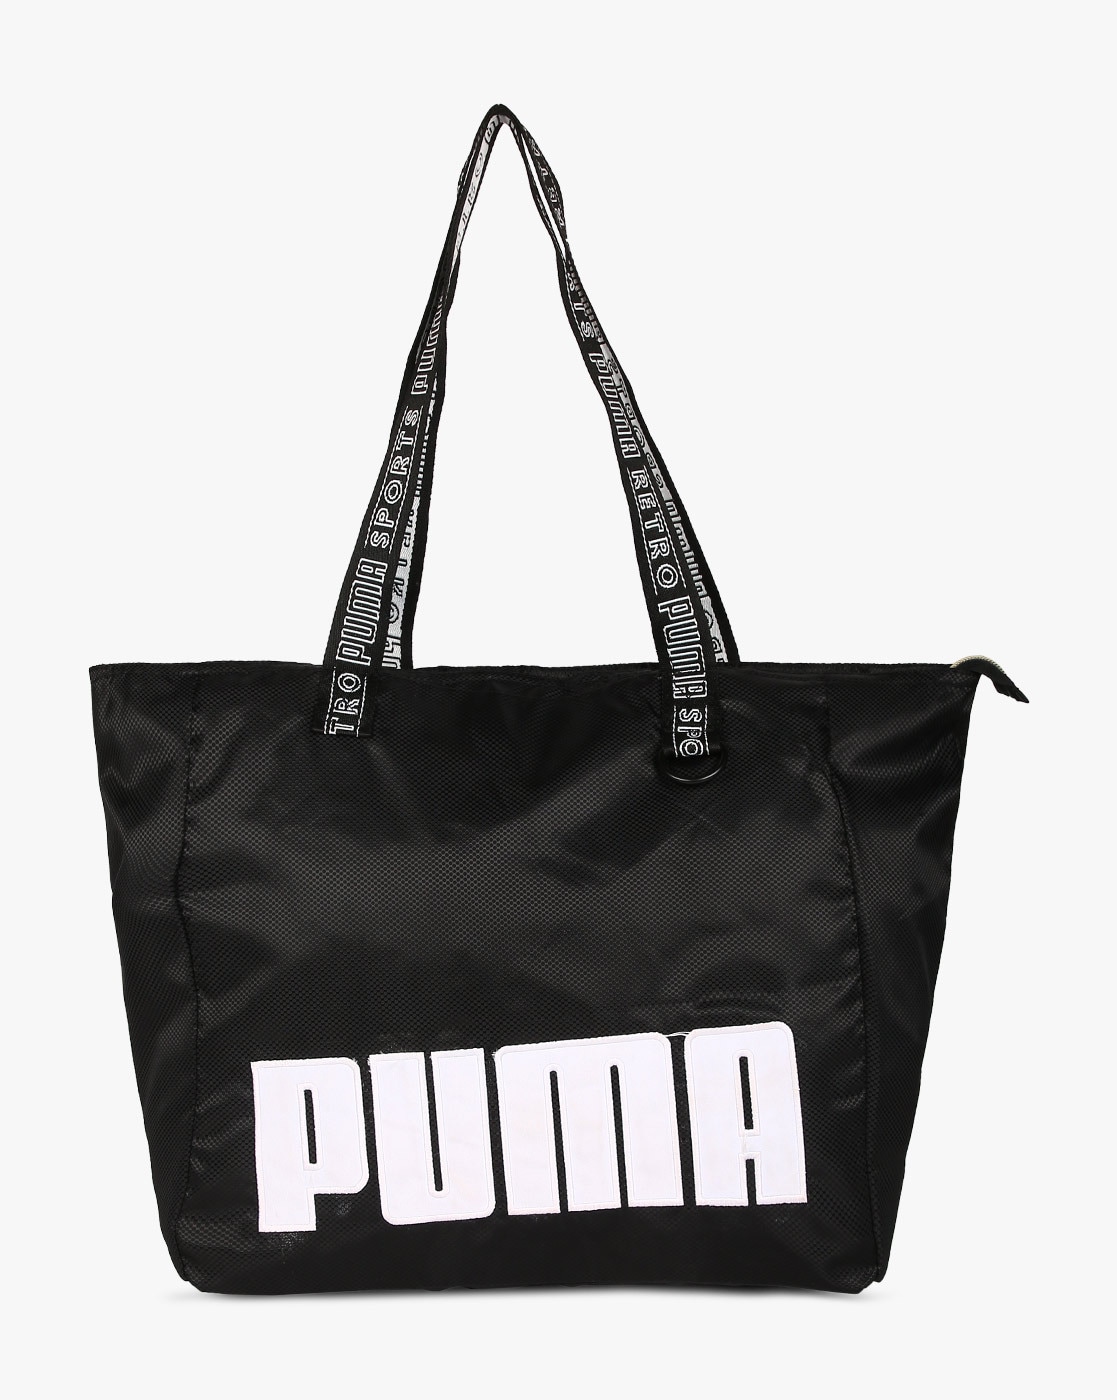 Puma - Crossover Bag - PSC1044 - Heather Blue/ Navy - Size: One Size -  Walmart.com